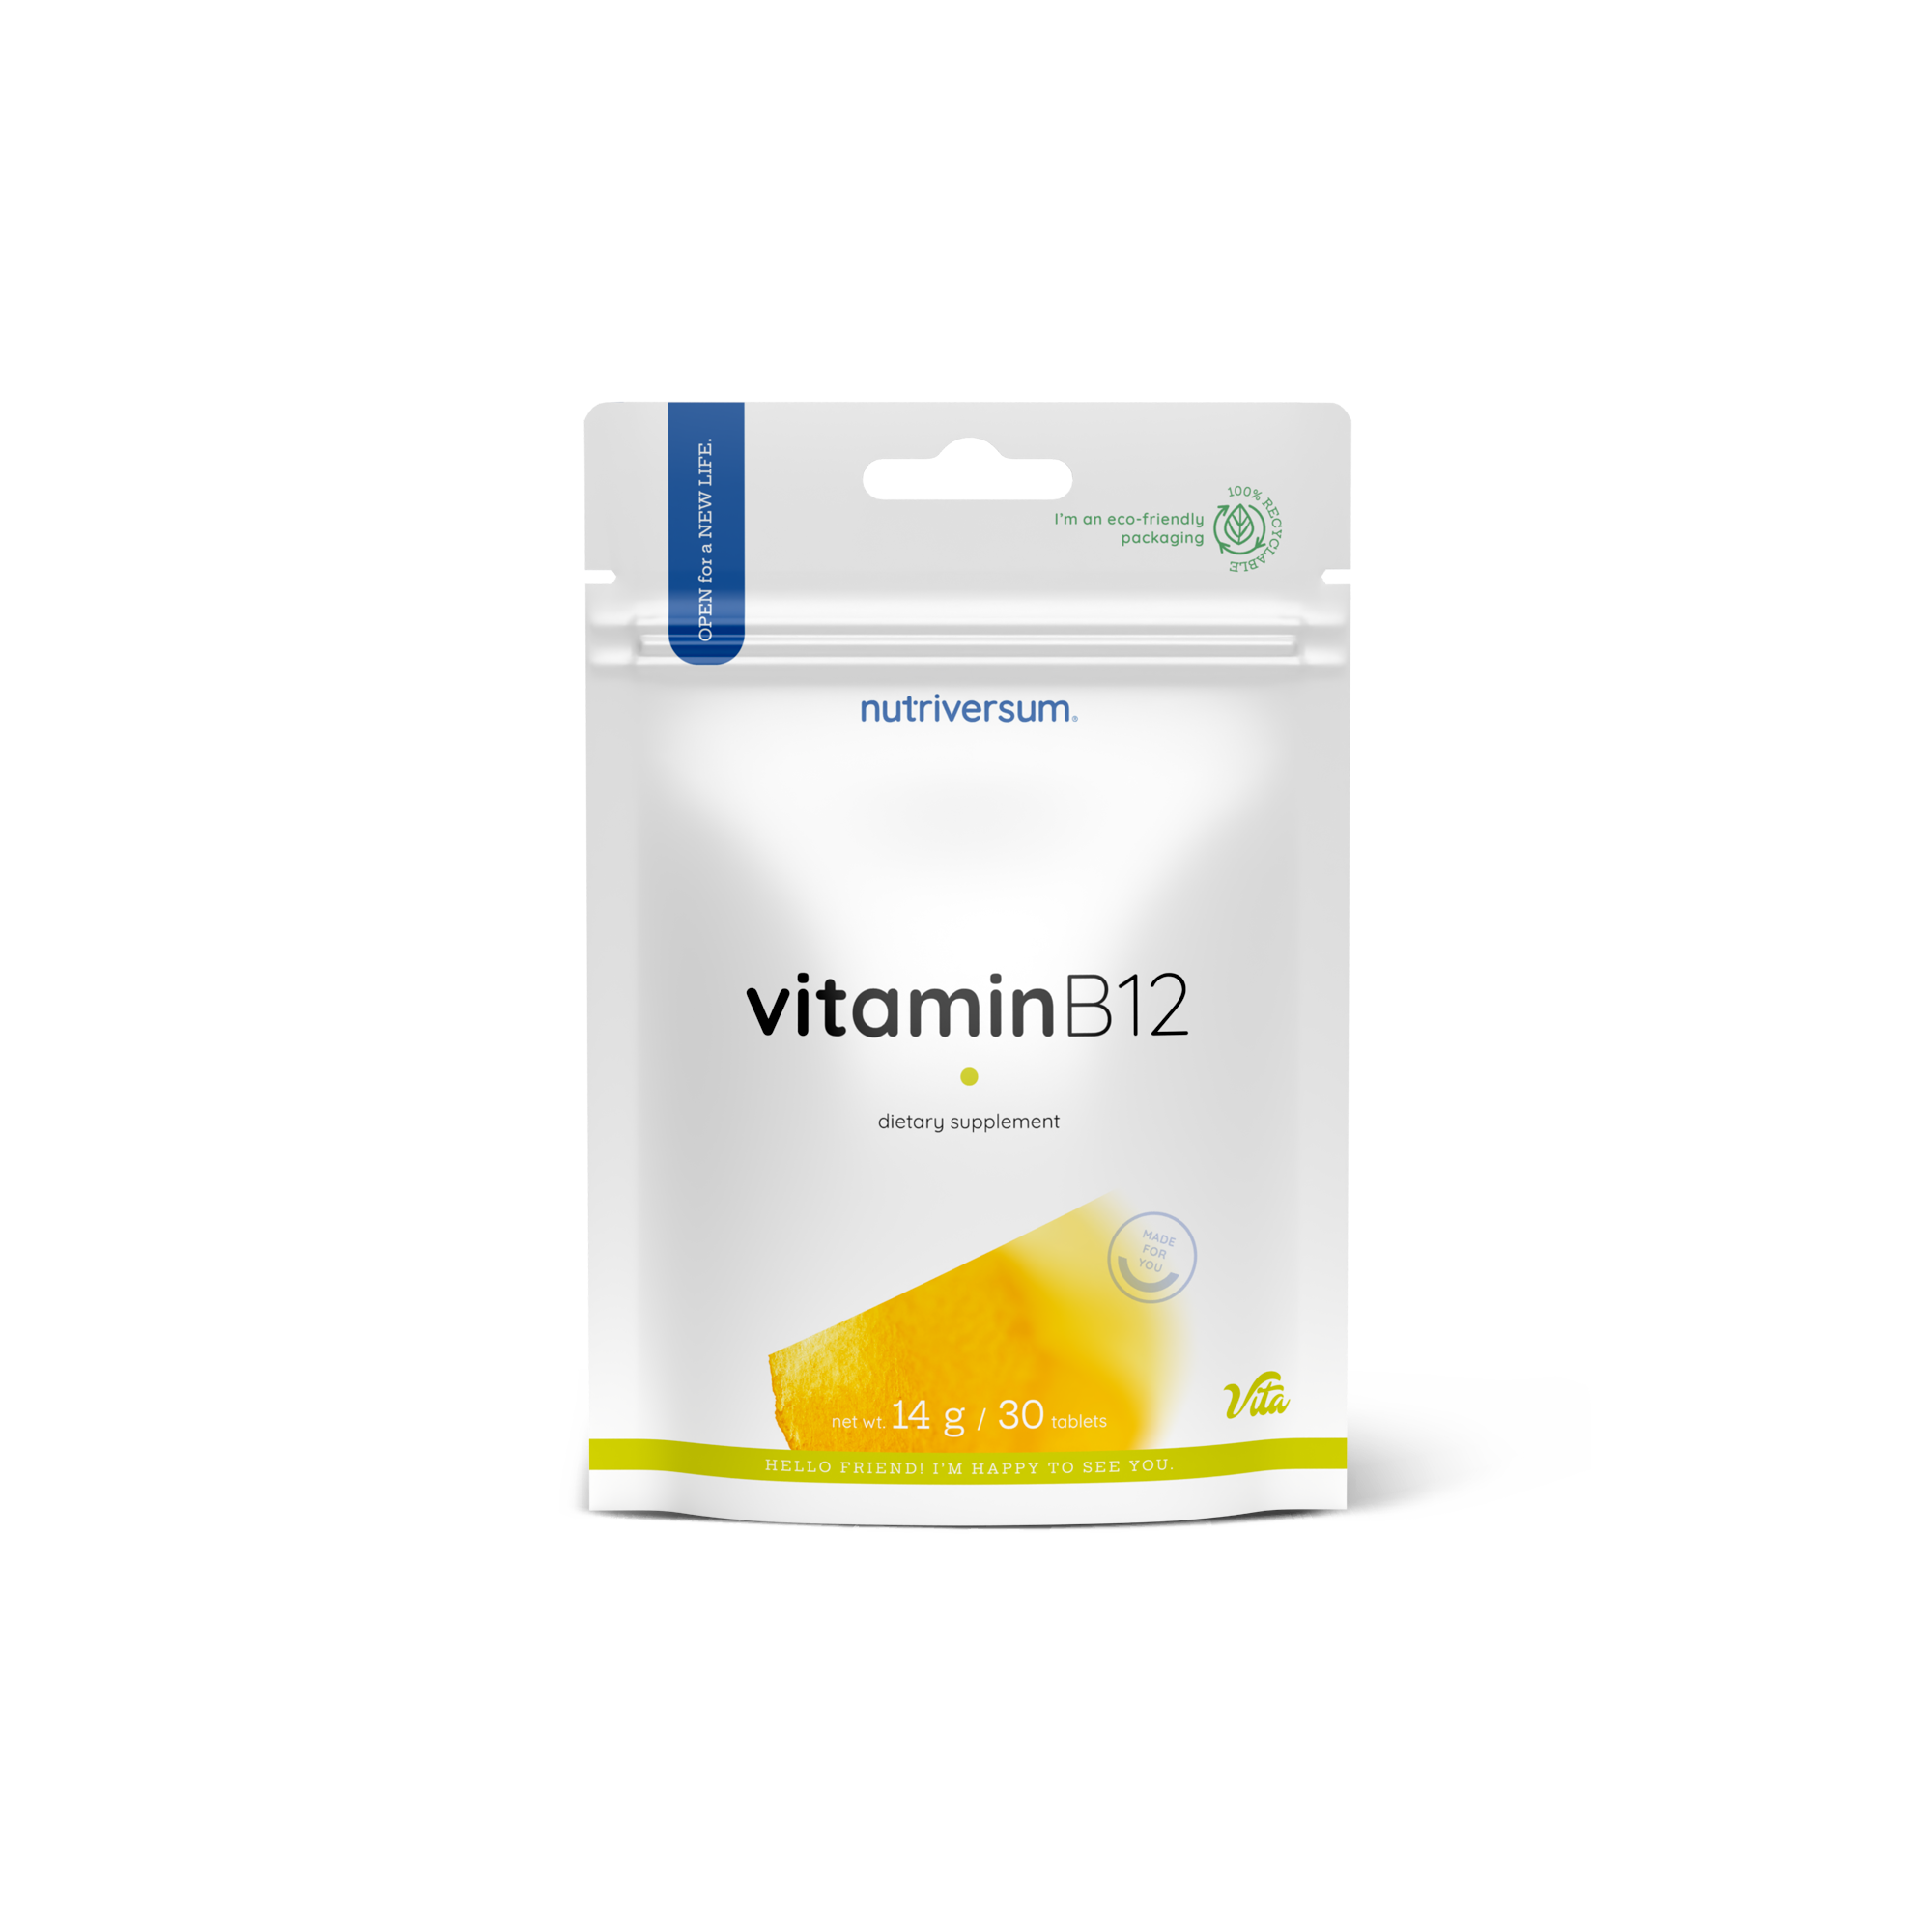 VITA - Vitamin B12 - NEW Nutriversum